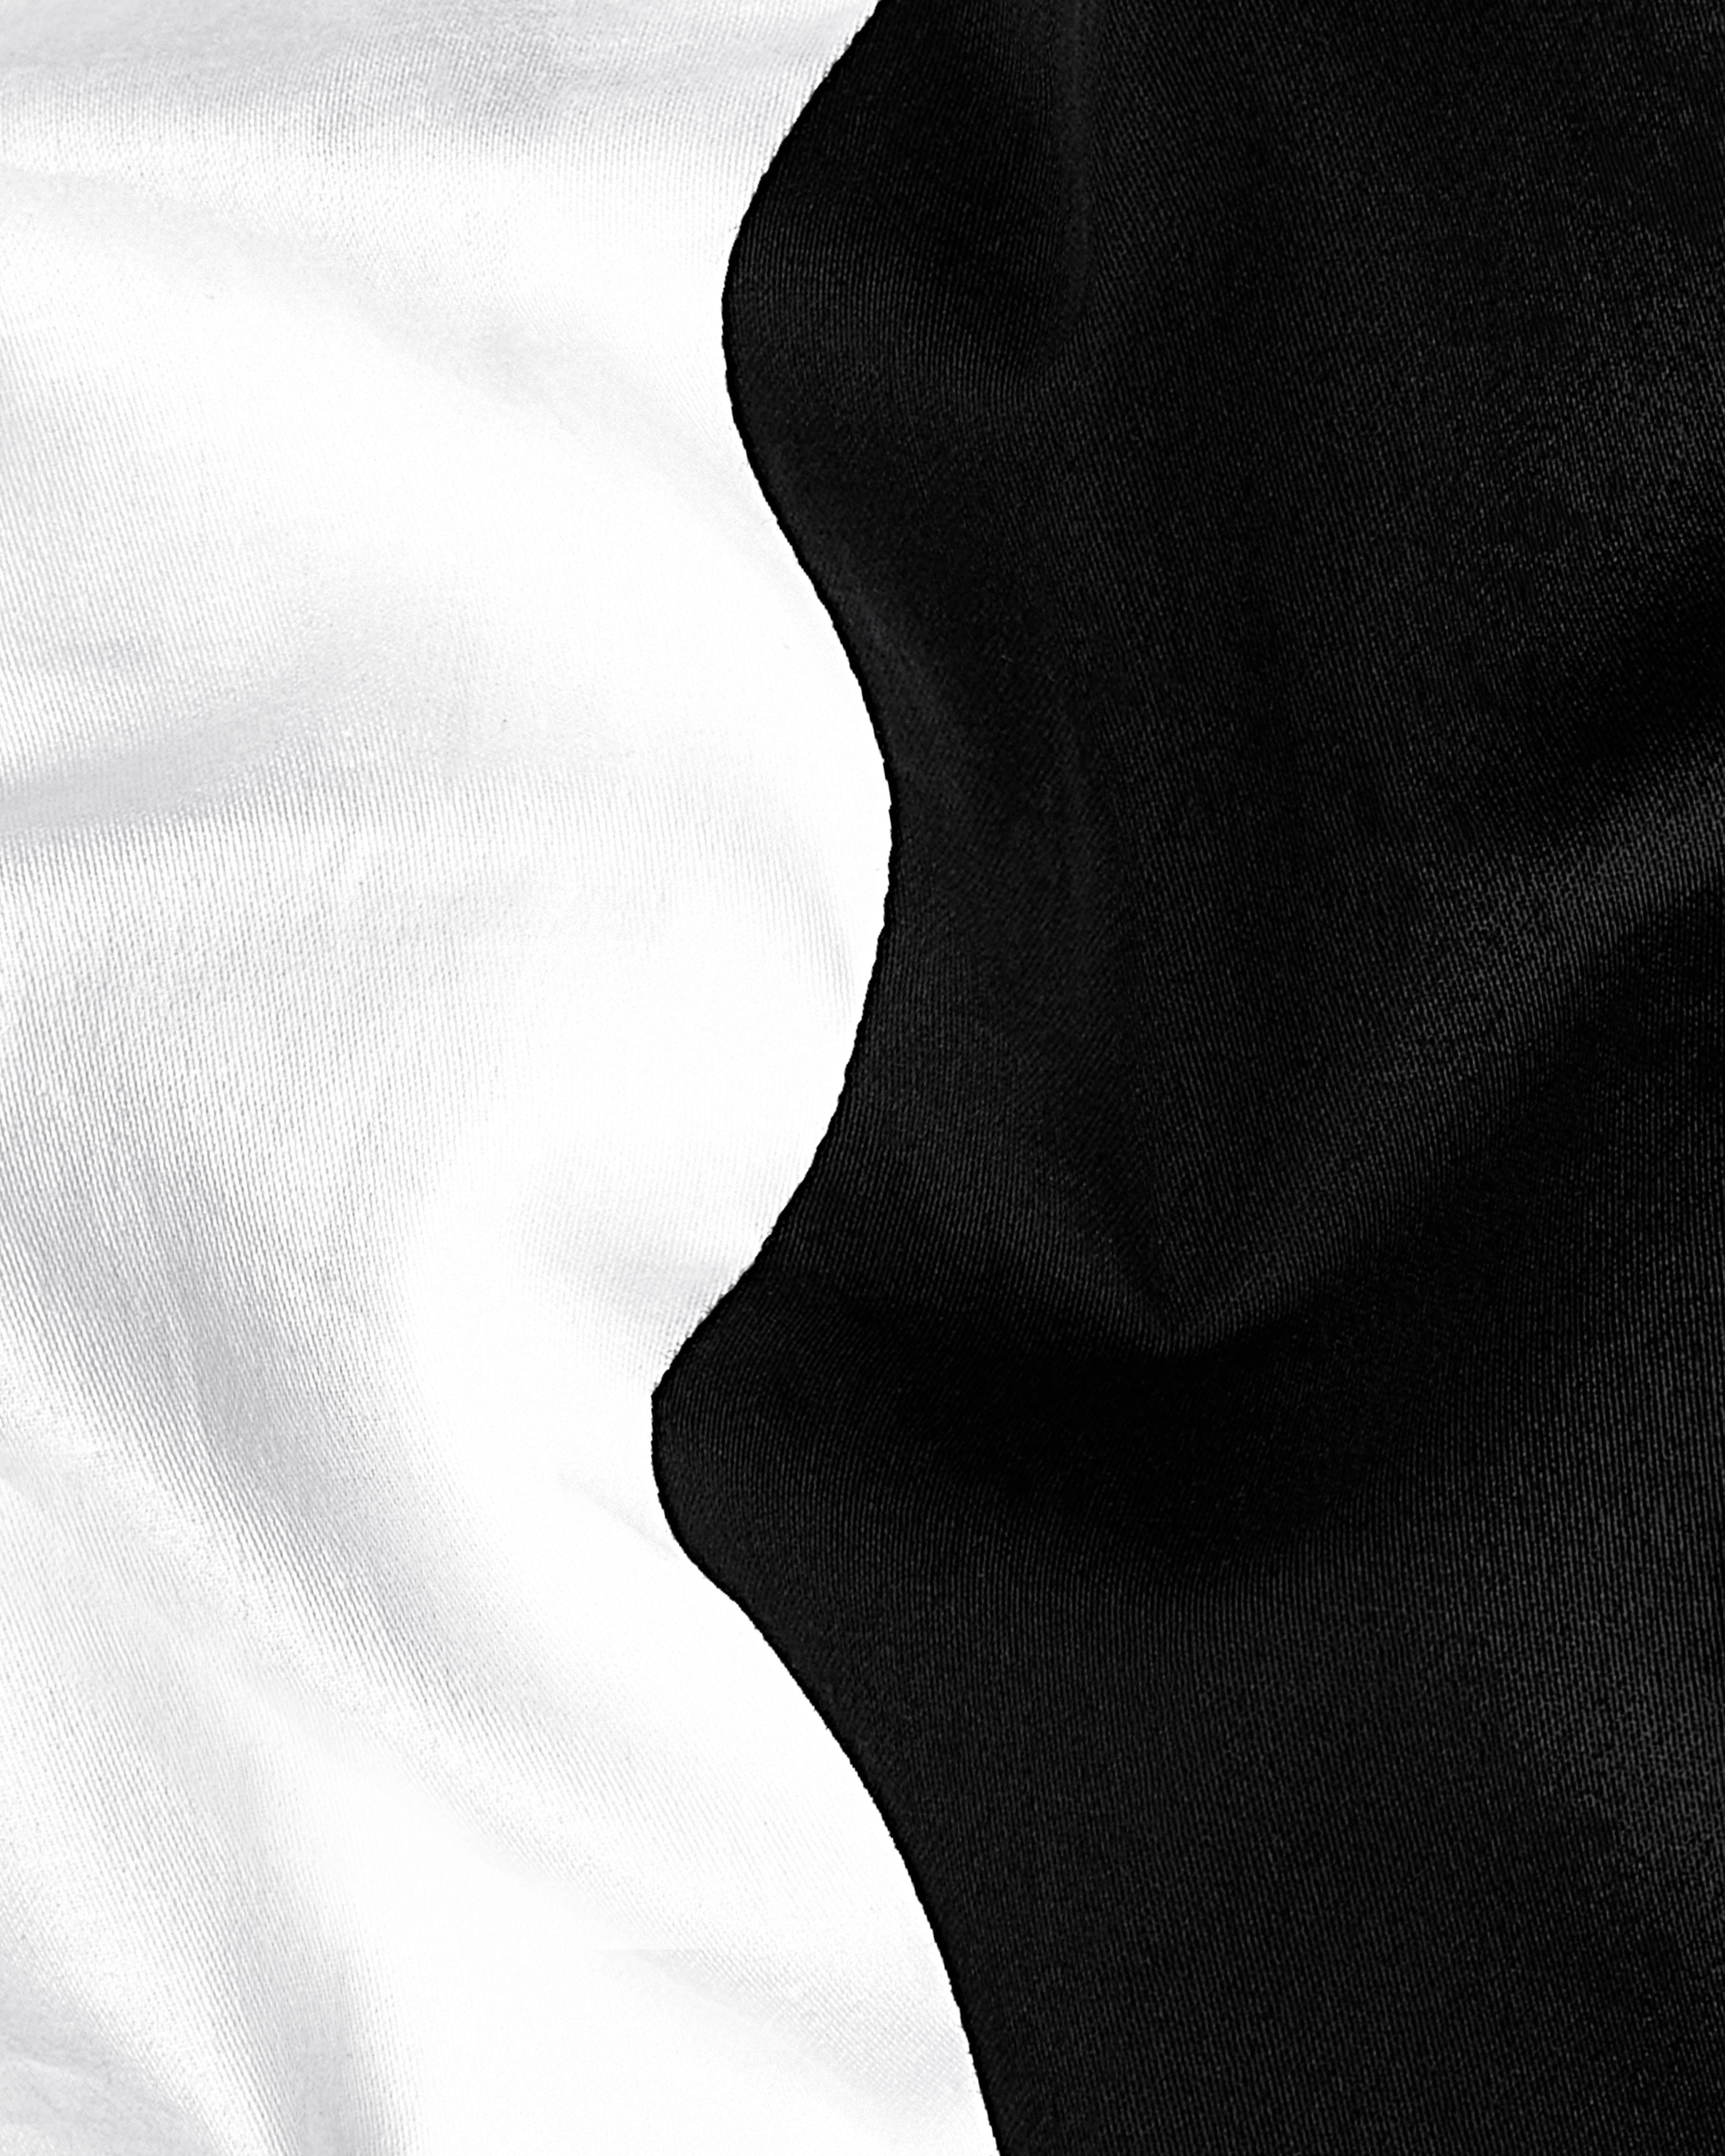 Half white and Half Black Subtle Sheen Premium Cotton Shirt 4265-BLK-P28-38, 4265-BLK-P28-H-38, 4265-BLK-P28-39, 4265-BLK-P28-H-39, 4265-BLK-P28-40, 4265-BLK-P28-H-40, 4265-BLK-P28-42, 4265-BLK-P28-H-42, 4265-BLK-P28-44, 4265-BLK-P28-H-44, 4265-BLK-P28-46, 4265-BLK-P28-H-46, 4265-BLK-P28-48, 4265-BLK-P28-H-48, 4265-BLK-P28-50, 4265-BLK-P28-H-50, 4265-BLK-P28-52, 4265-BLK-P28-H-52